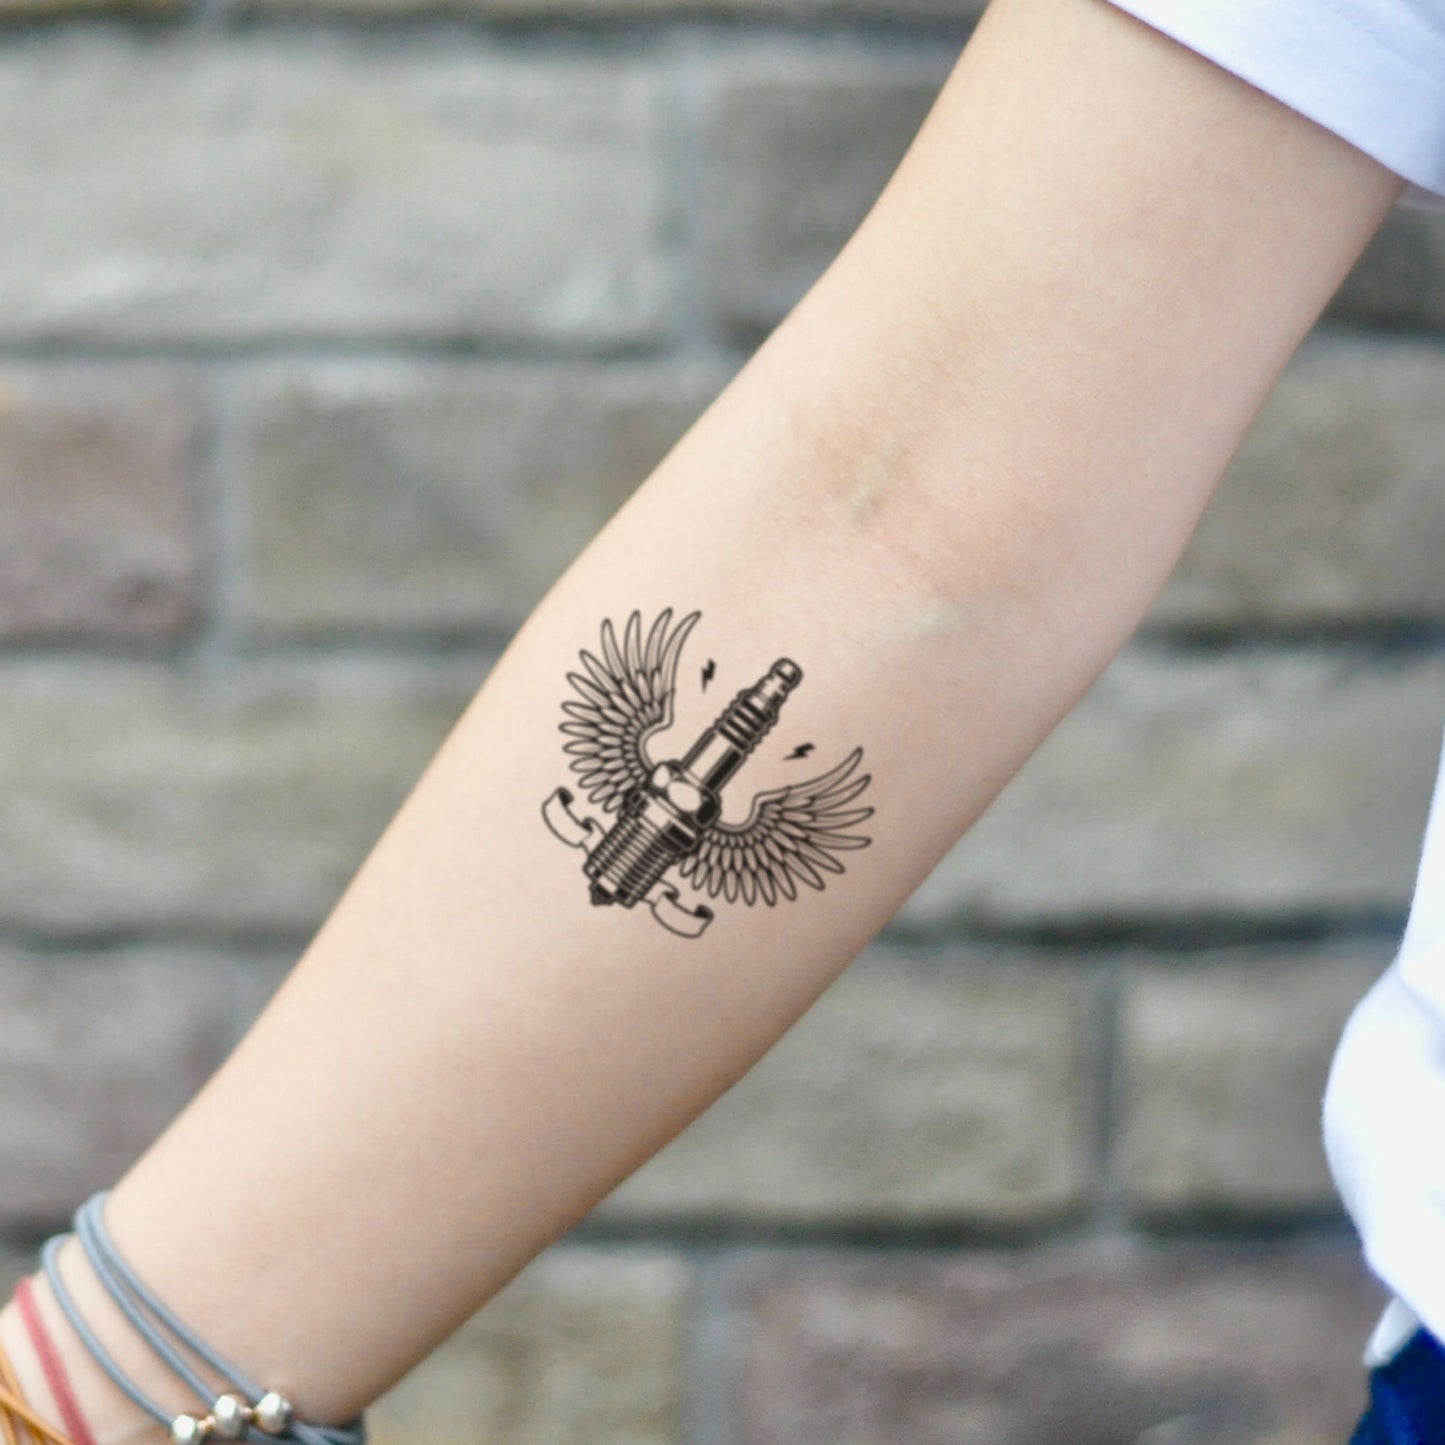 fake small spark plug old new school illustrative temporary tattoo sticker design idea on inner arm